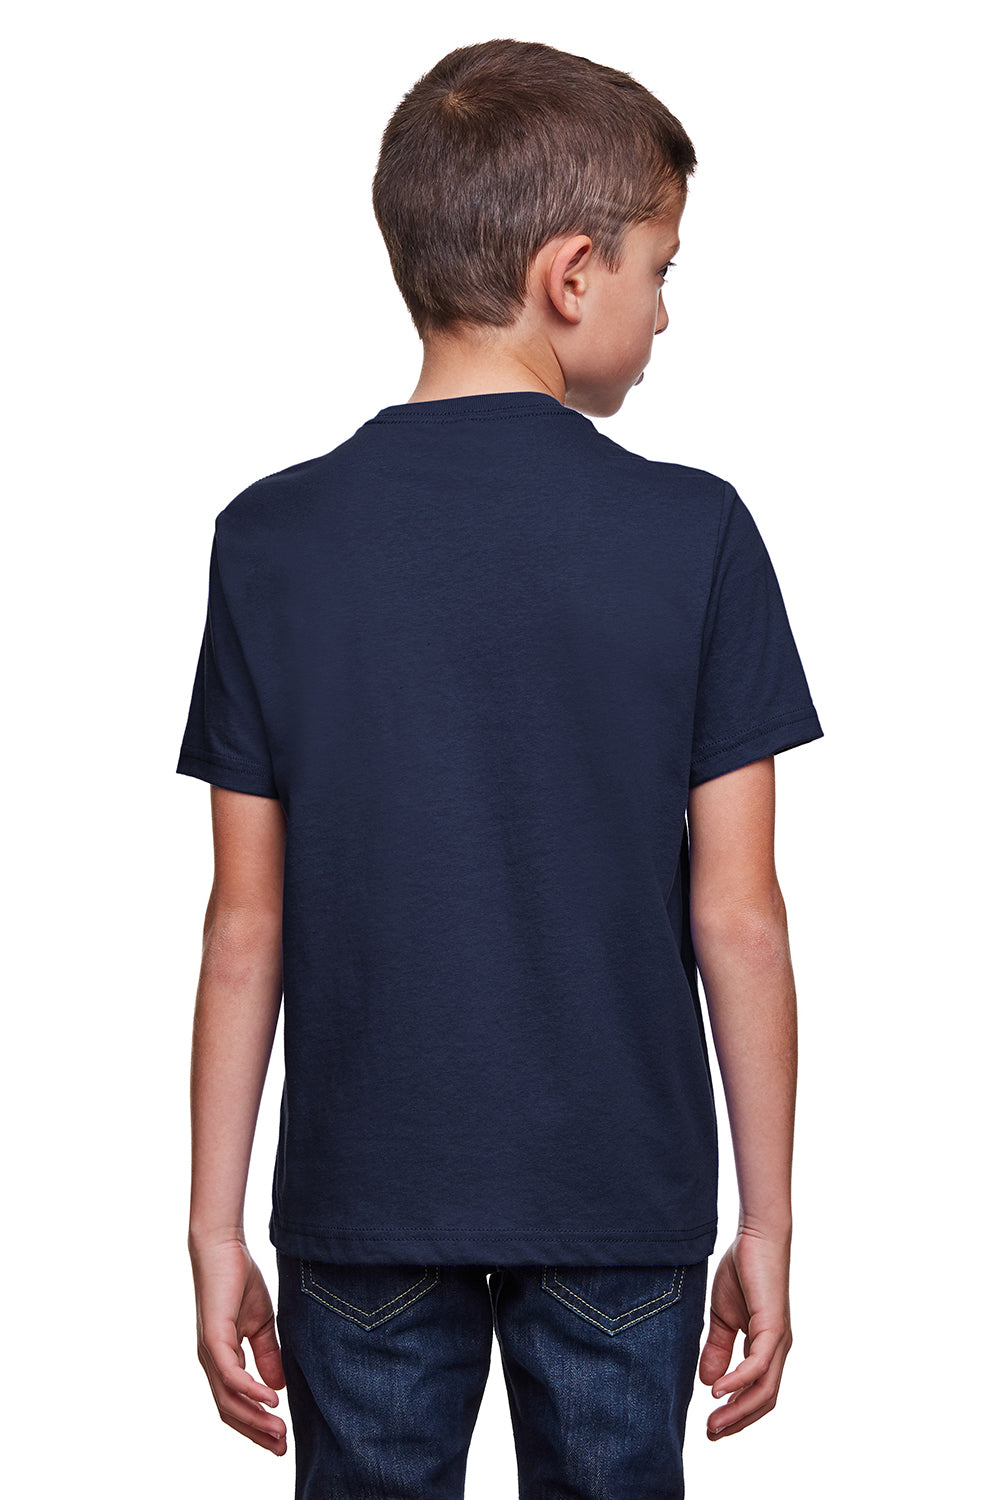 Next Level 4212 Youth Eco Performance Moisture Wicking Short Sleeve Crewneck T-Shirt Navy Blue Back